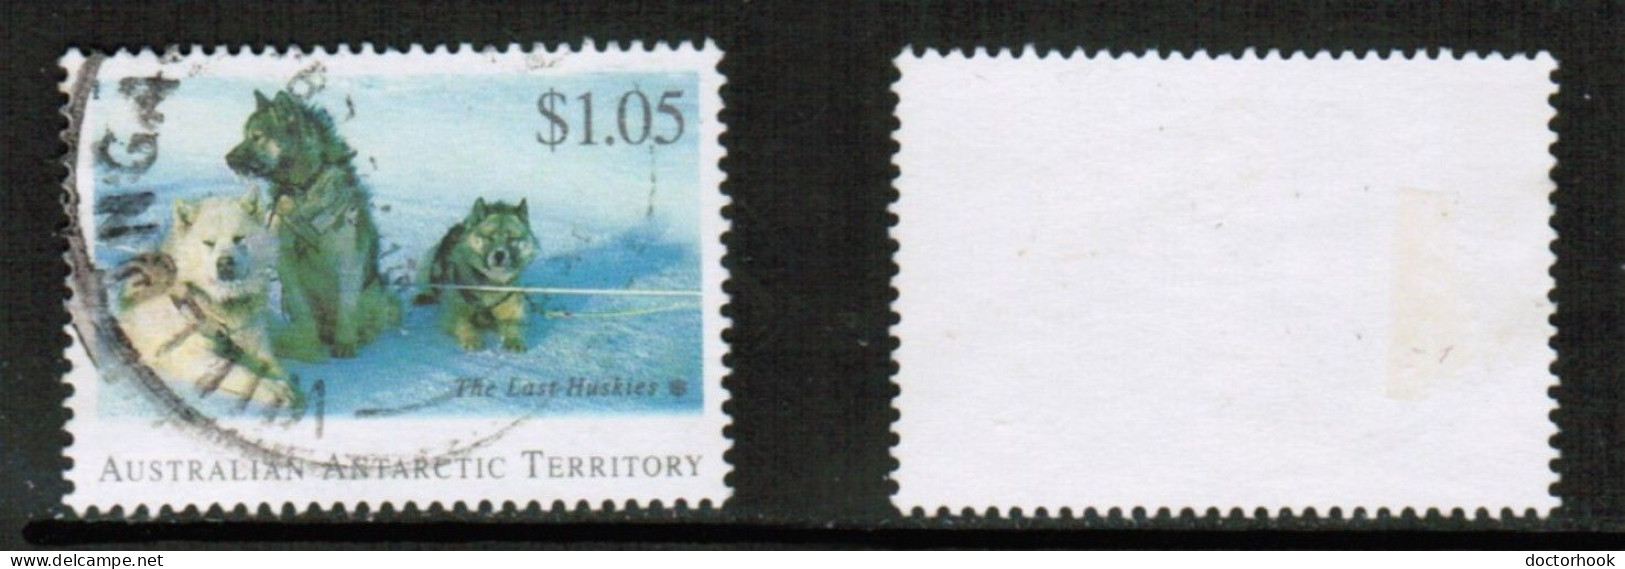 AUSTRALIAN ANTARCTIC TERRITORY   Scott # L 93 USED (CONDITION AS PER SCAN) (Stamp Scan # 929-3) - Usati